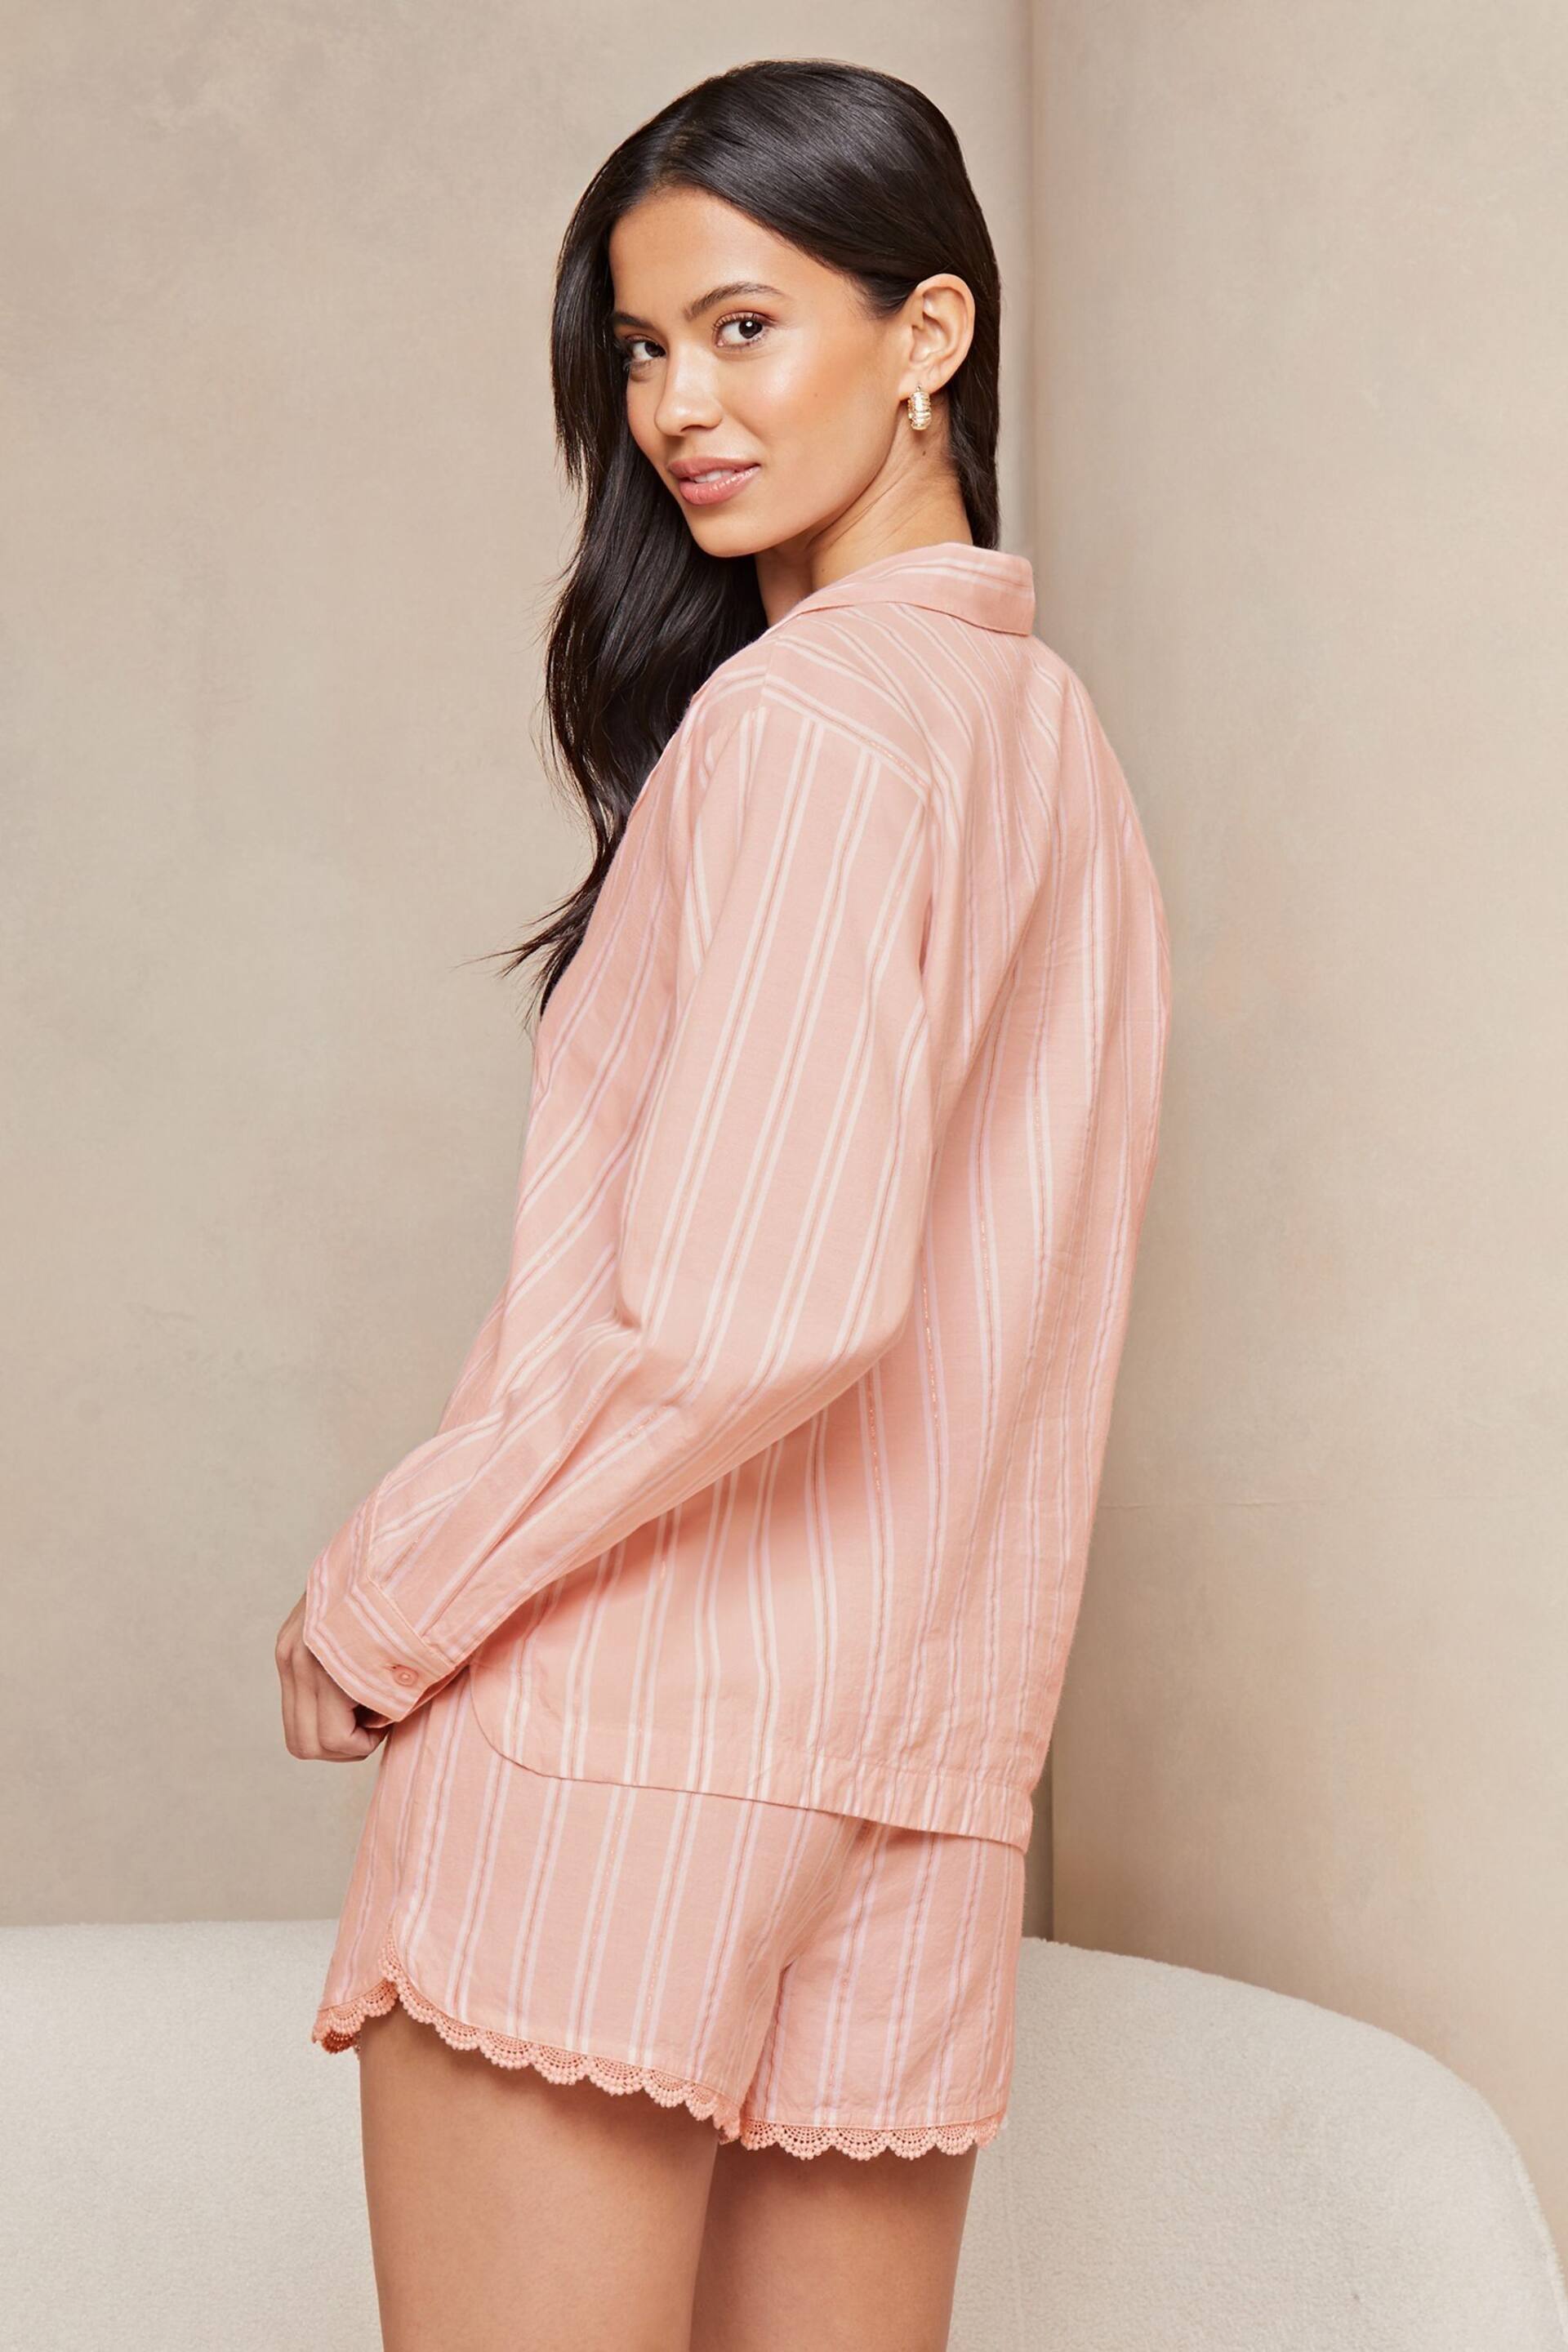 Lipsy Pink Metallic Stripe Long Sleeve Shorts Pyjamas - Image 1 of 3